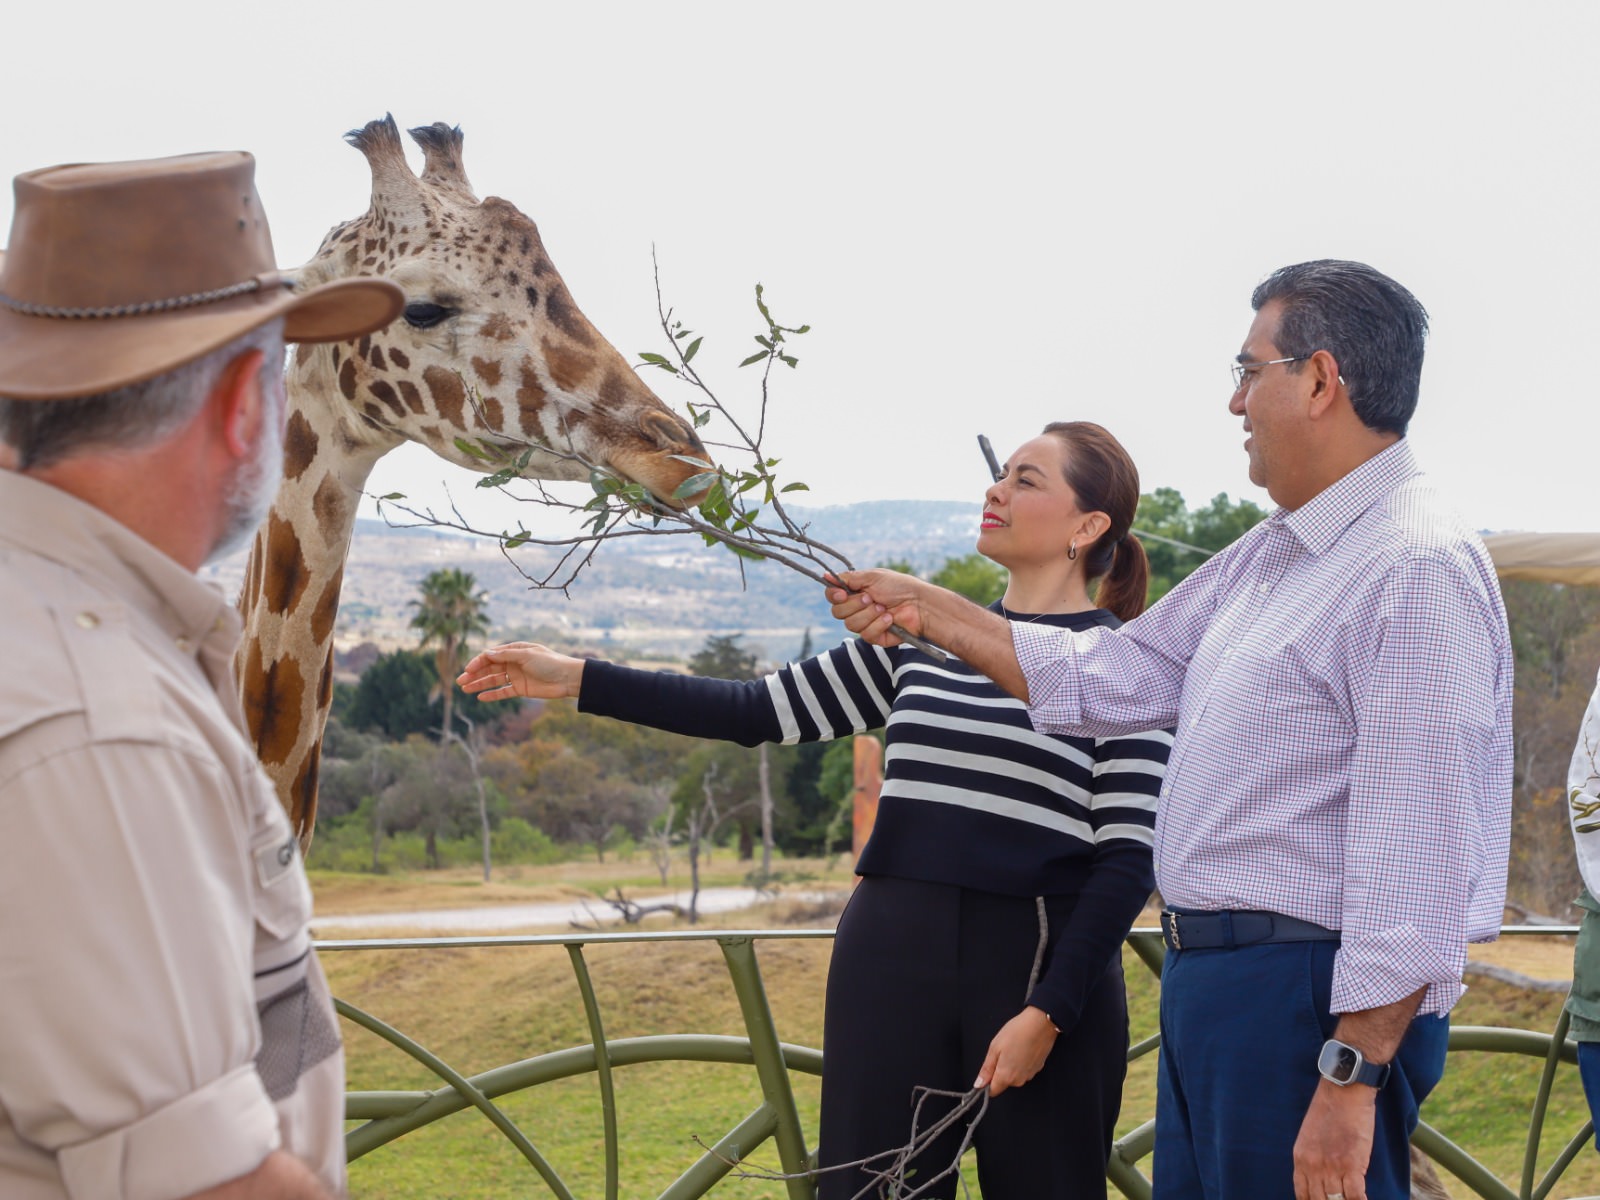 Africam Safari en Puebla celebra la llegada triunfal de la Jirafa ‘Benito’